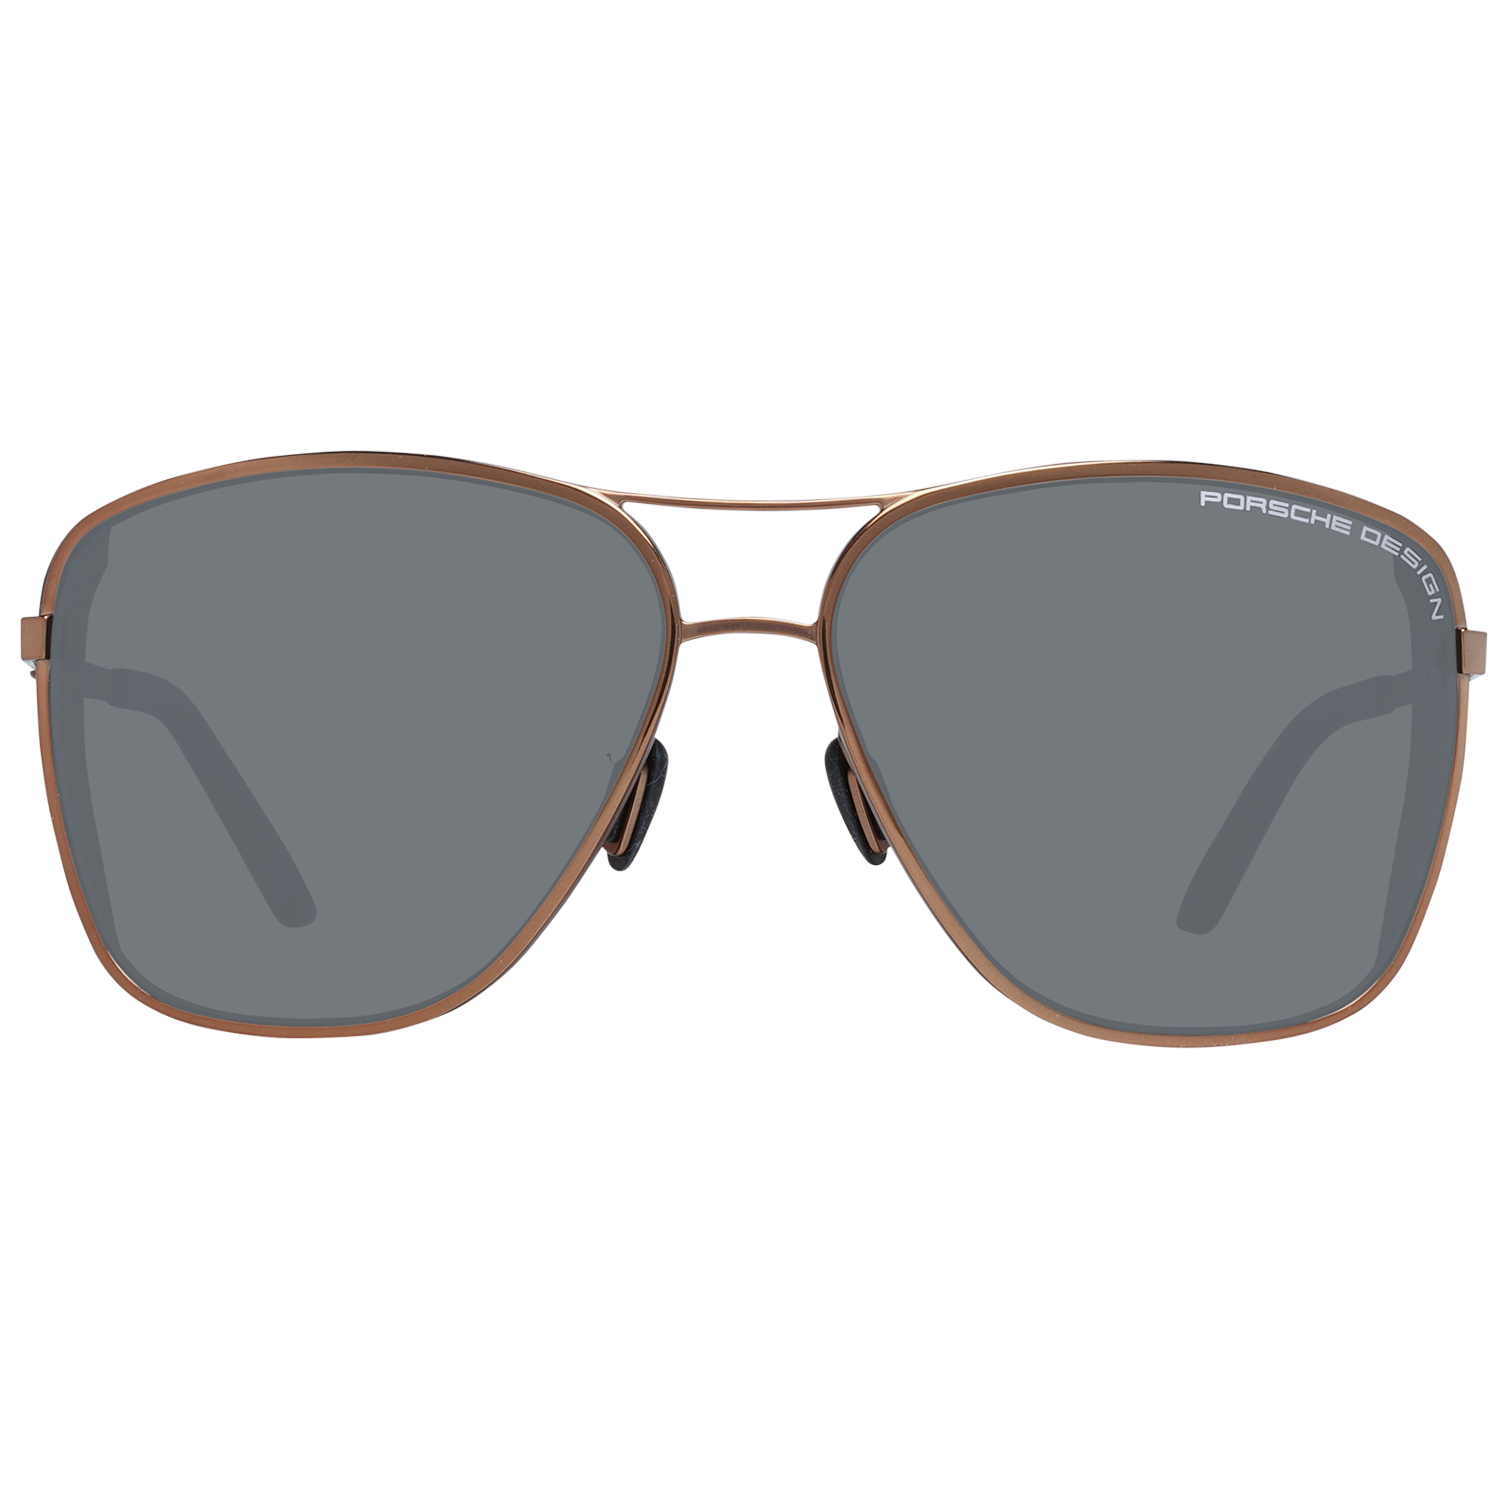 Porsche Design Sunglasses Porsche Design Sunglasses P8600 D 62 Titanium Eyeglasses Eyewear UK USA Australia 